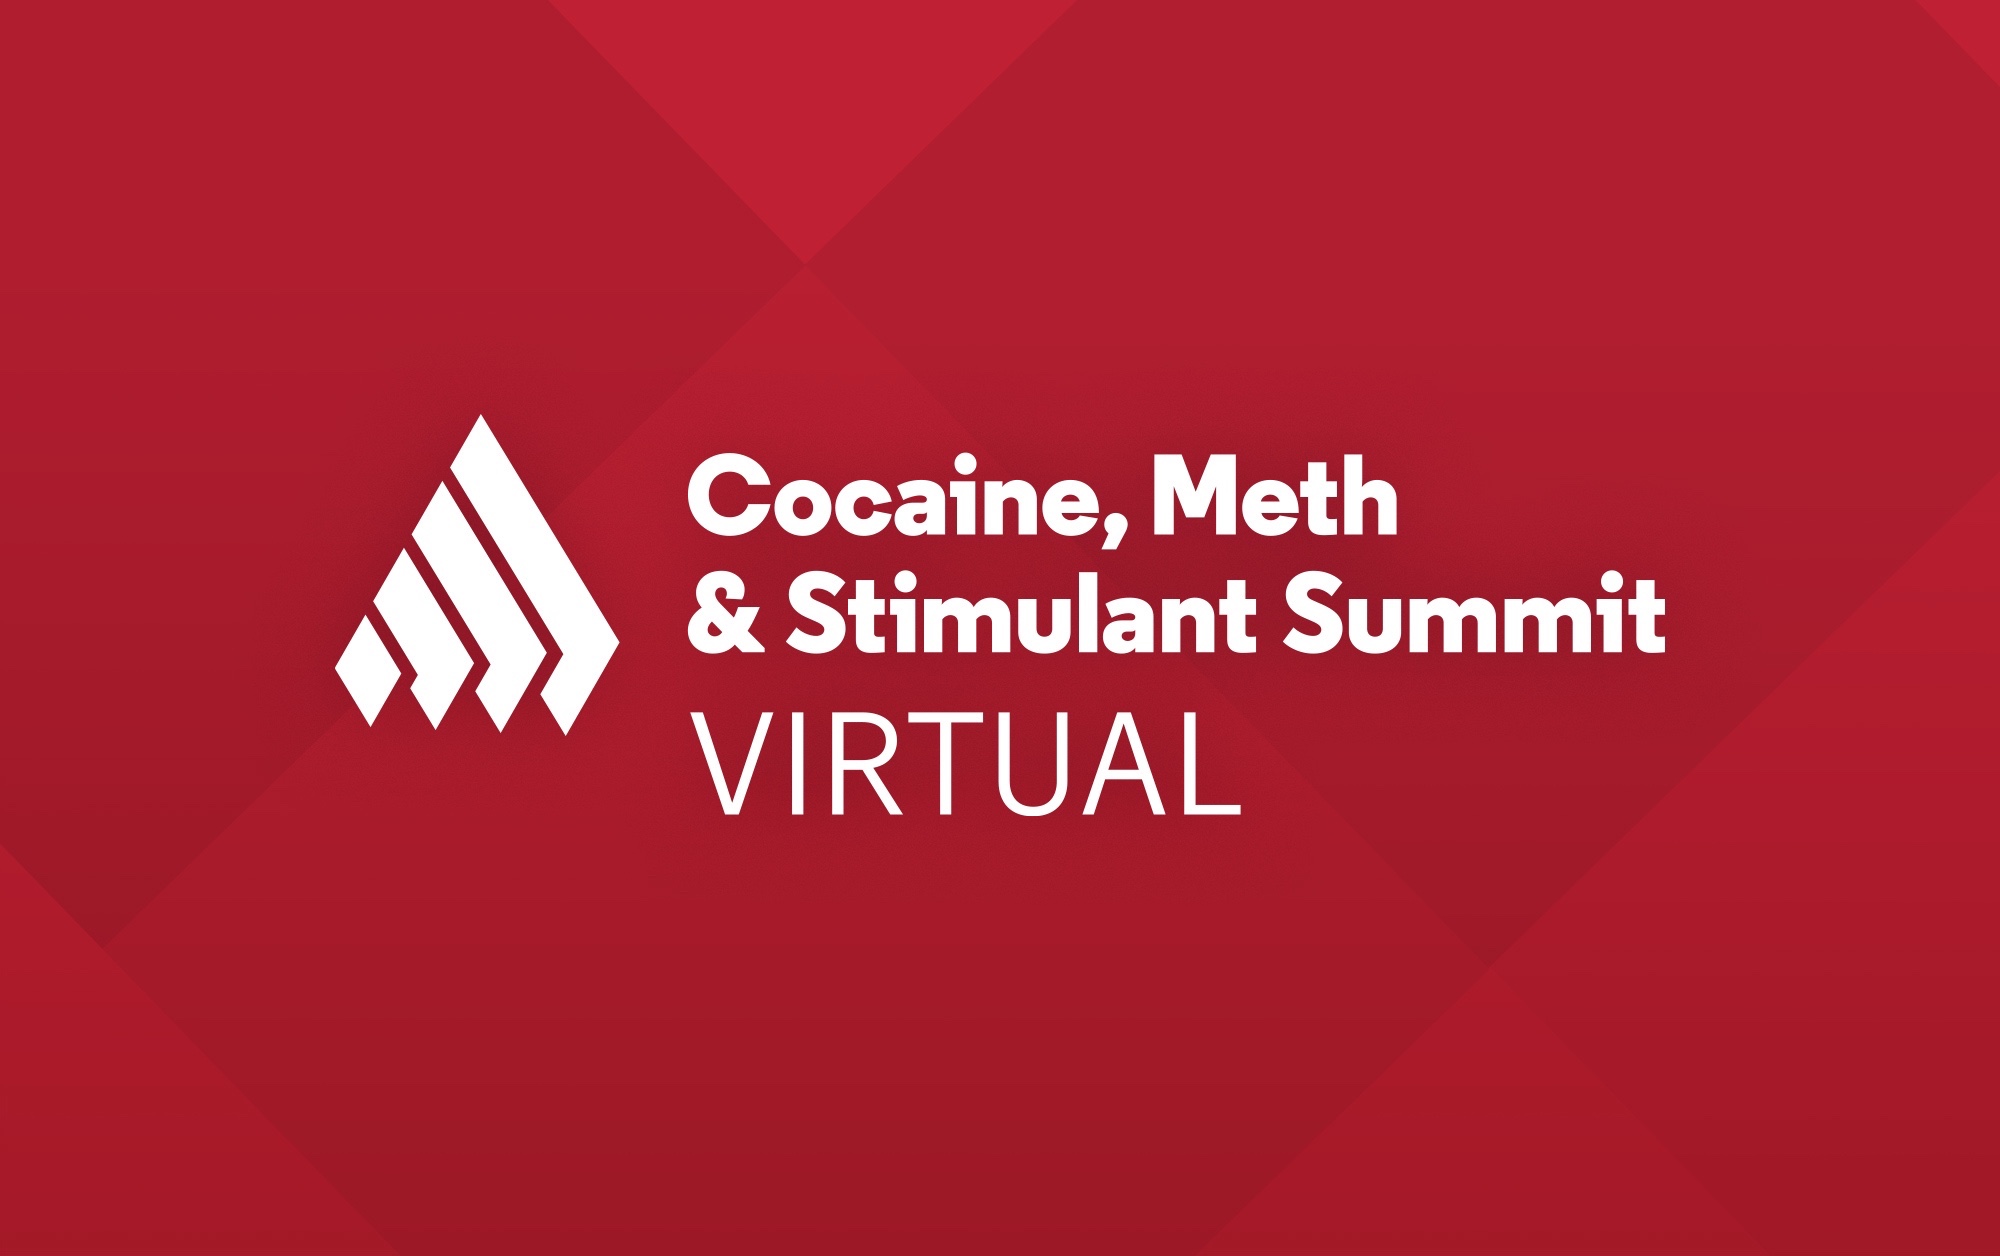 Cocaine, Meth & Stimulant Summit VIRTUAL